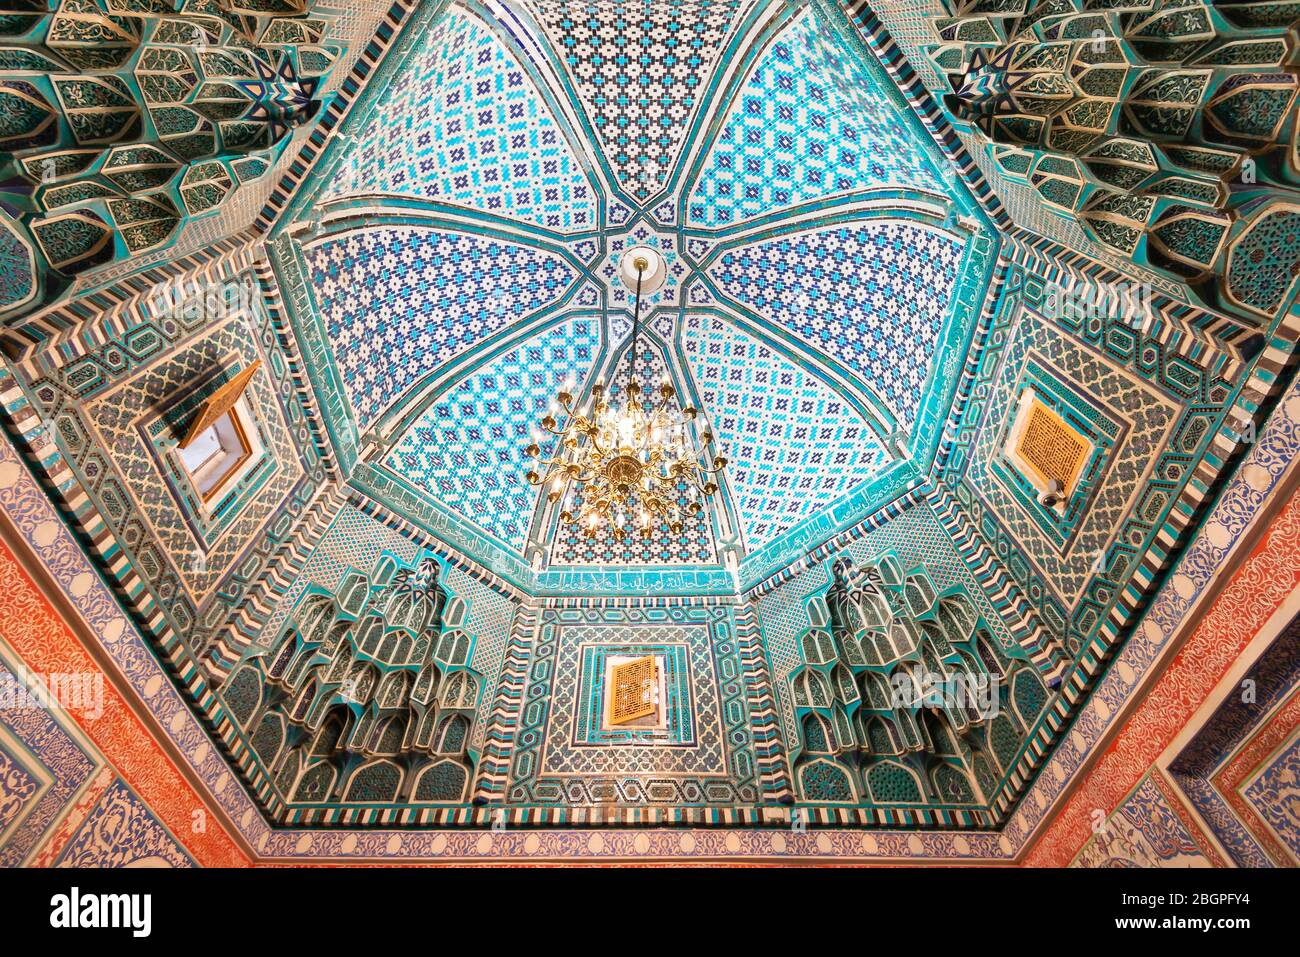 Decoration of the dome of the Kusam Ibn Abbas mausoleum in Shahi Zinda, Samarkand, Uzbekistan. Blue and turquoise majolica tiles. Stock Photo